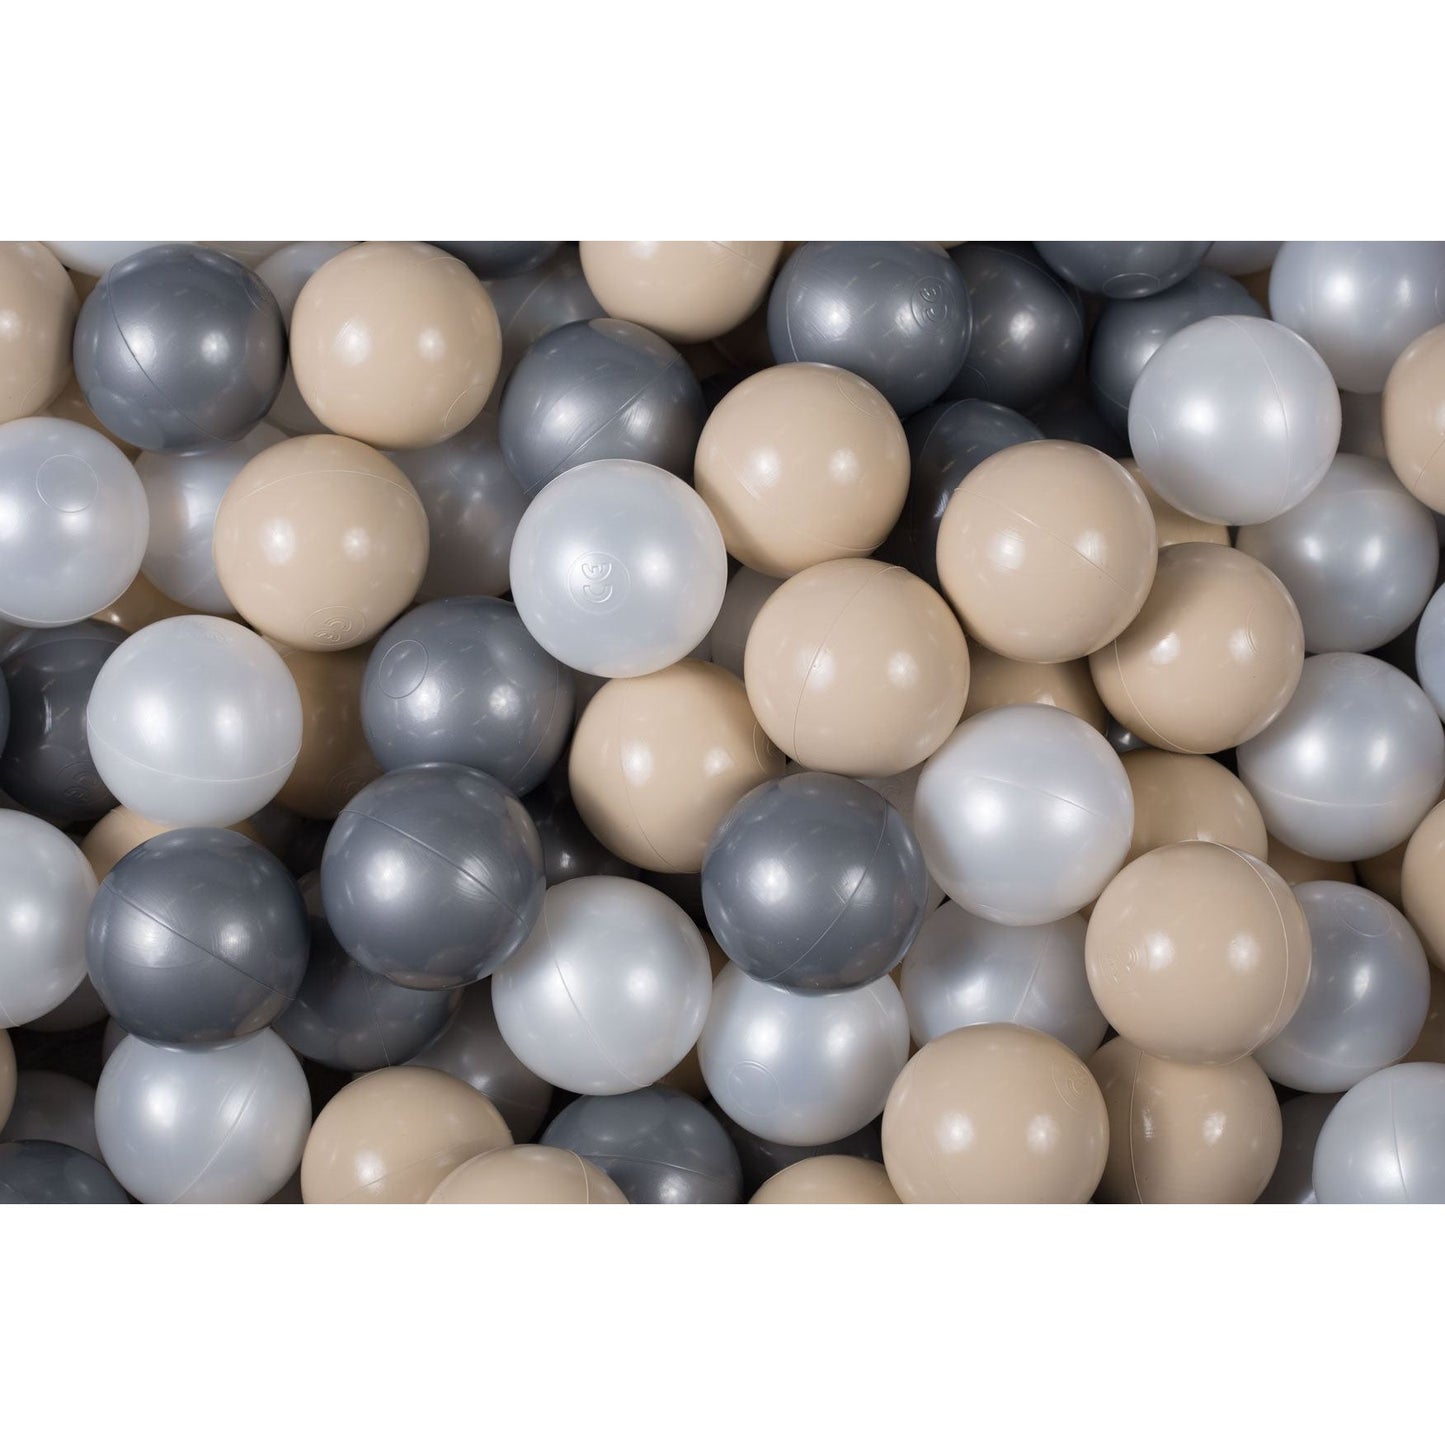 Velvet Corduroy Blue Marine Round Foam Ball Pit - Select Your Own Balls